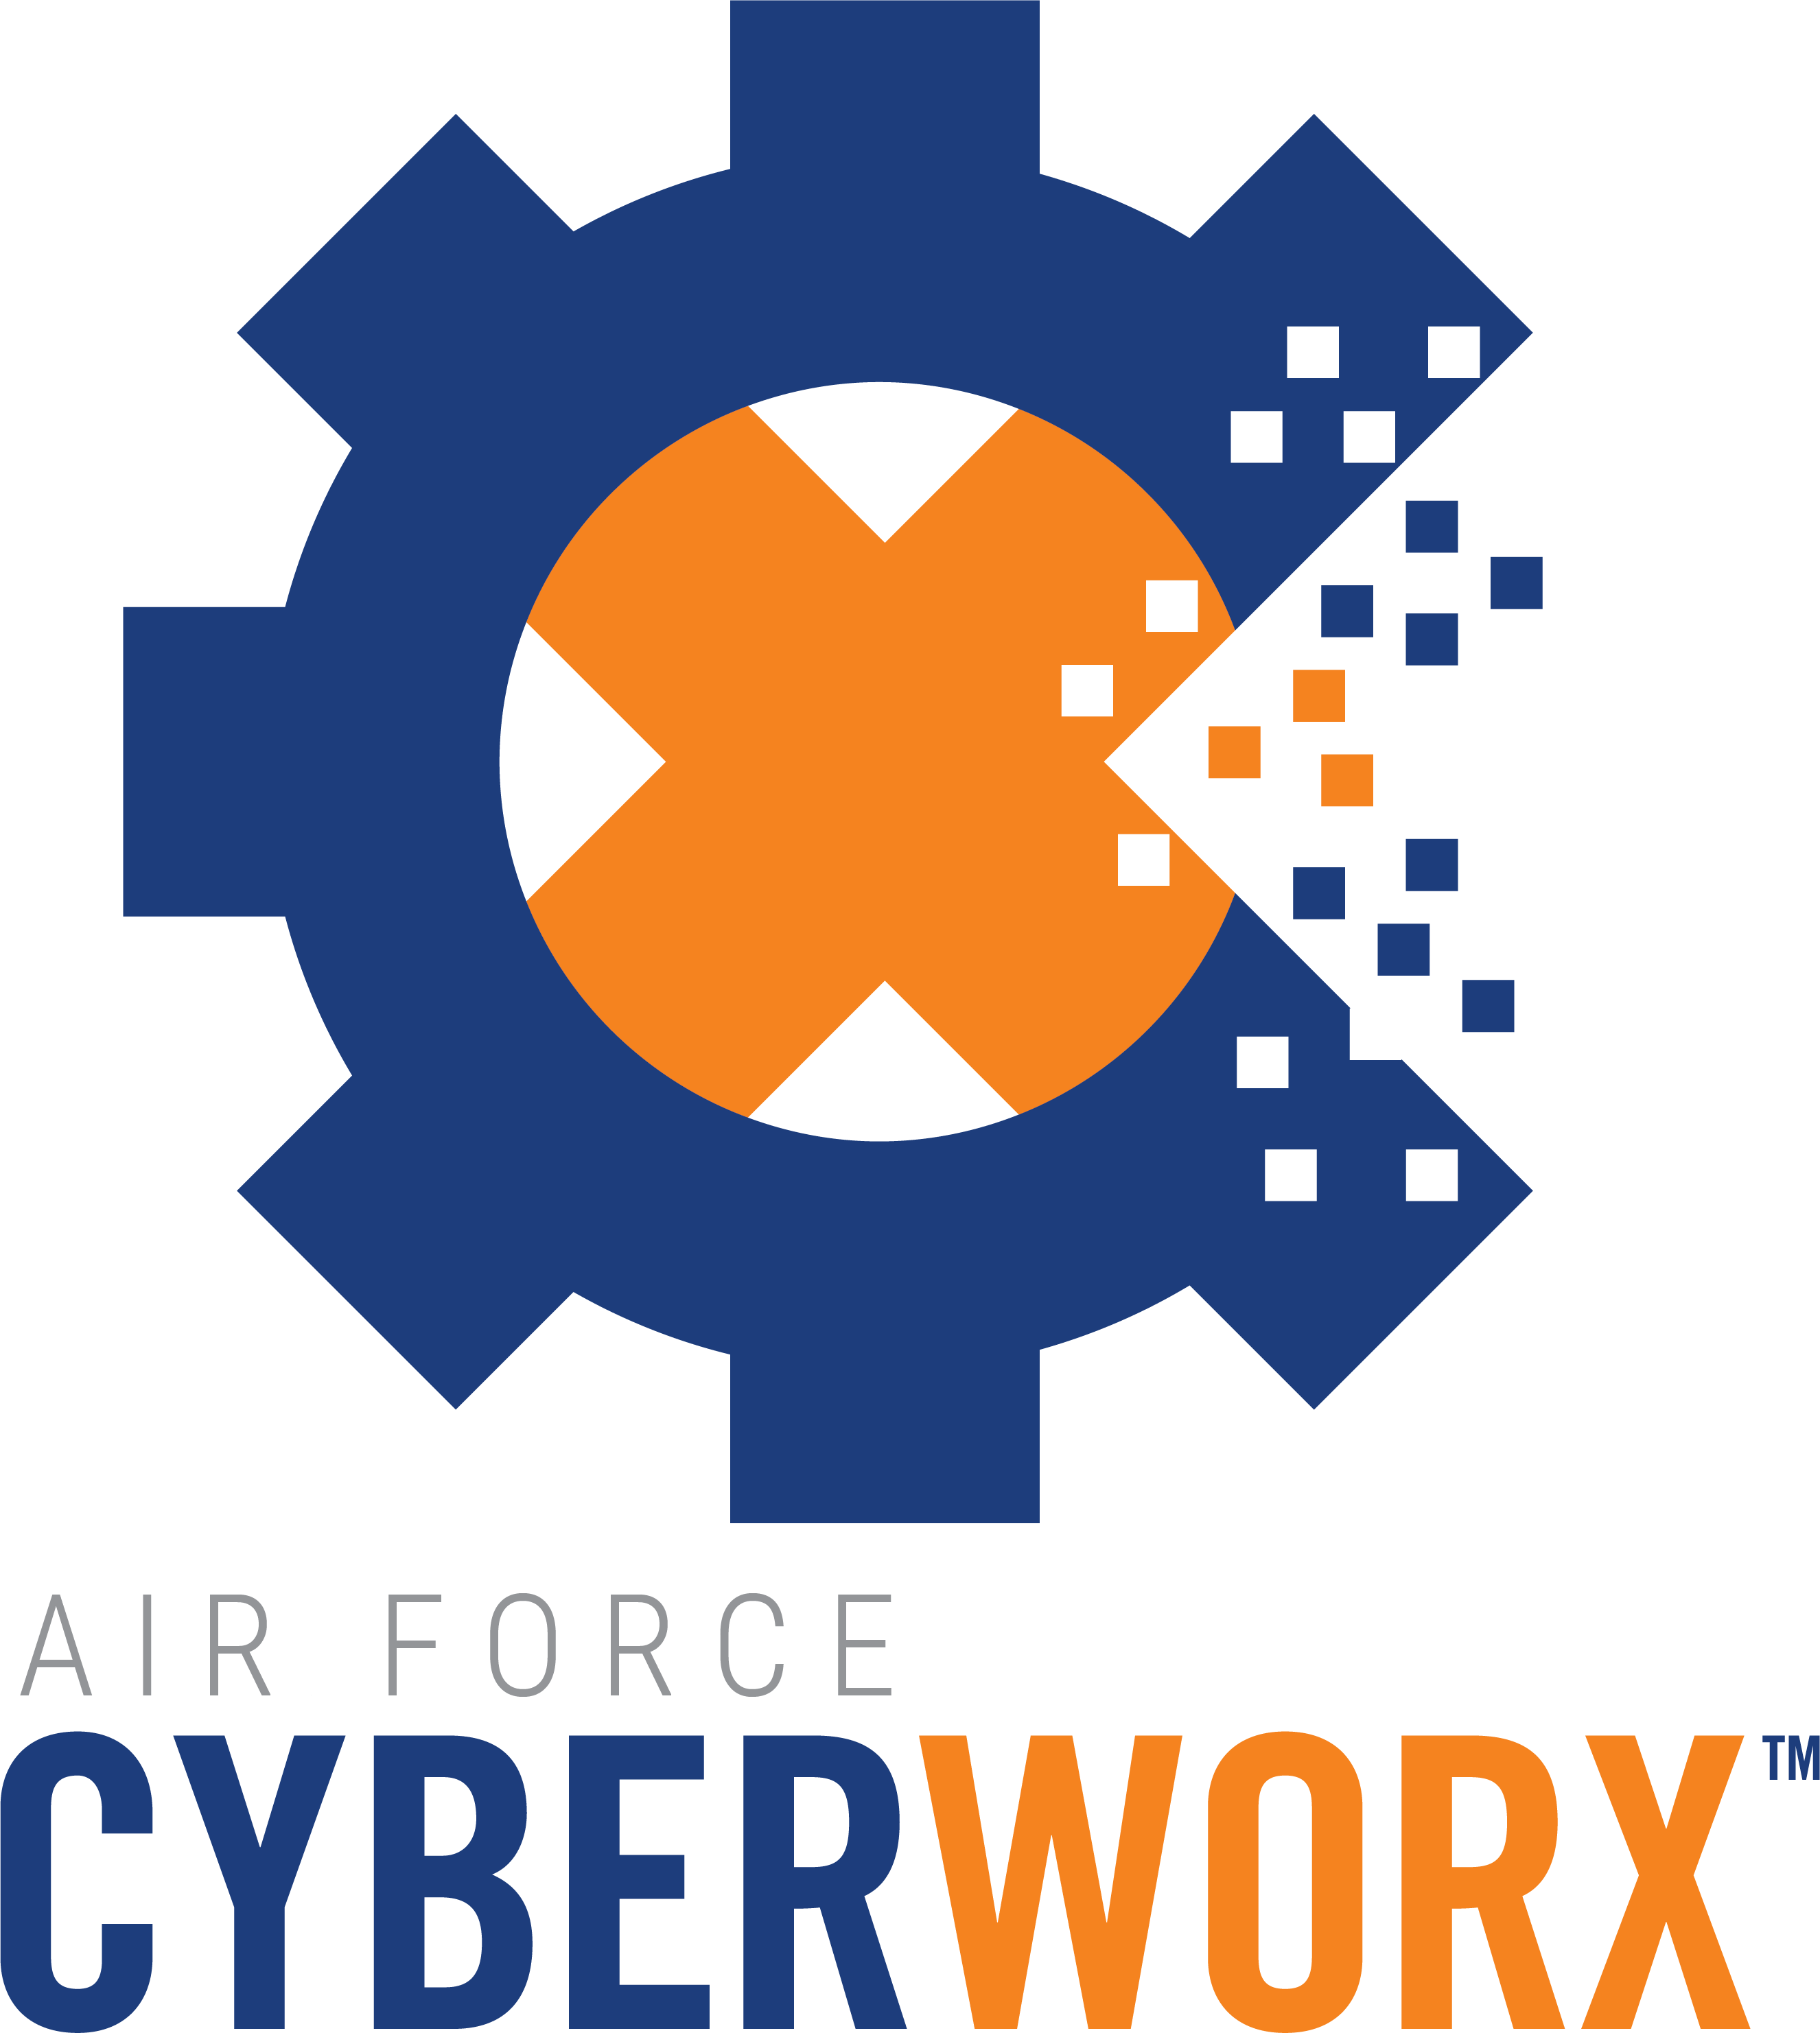 CyberWorx logo - square